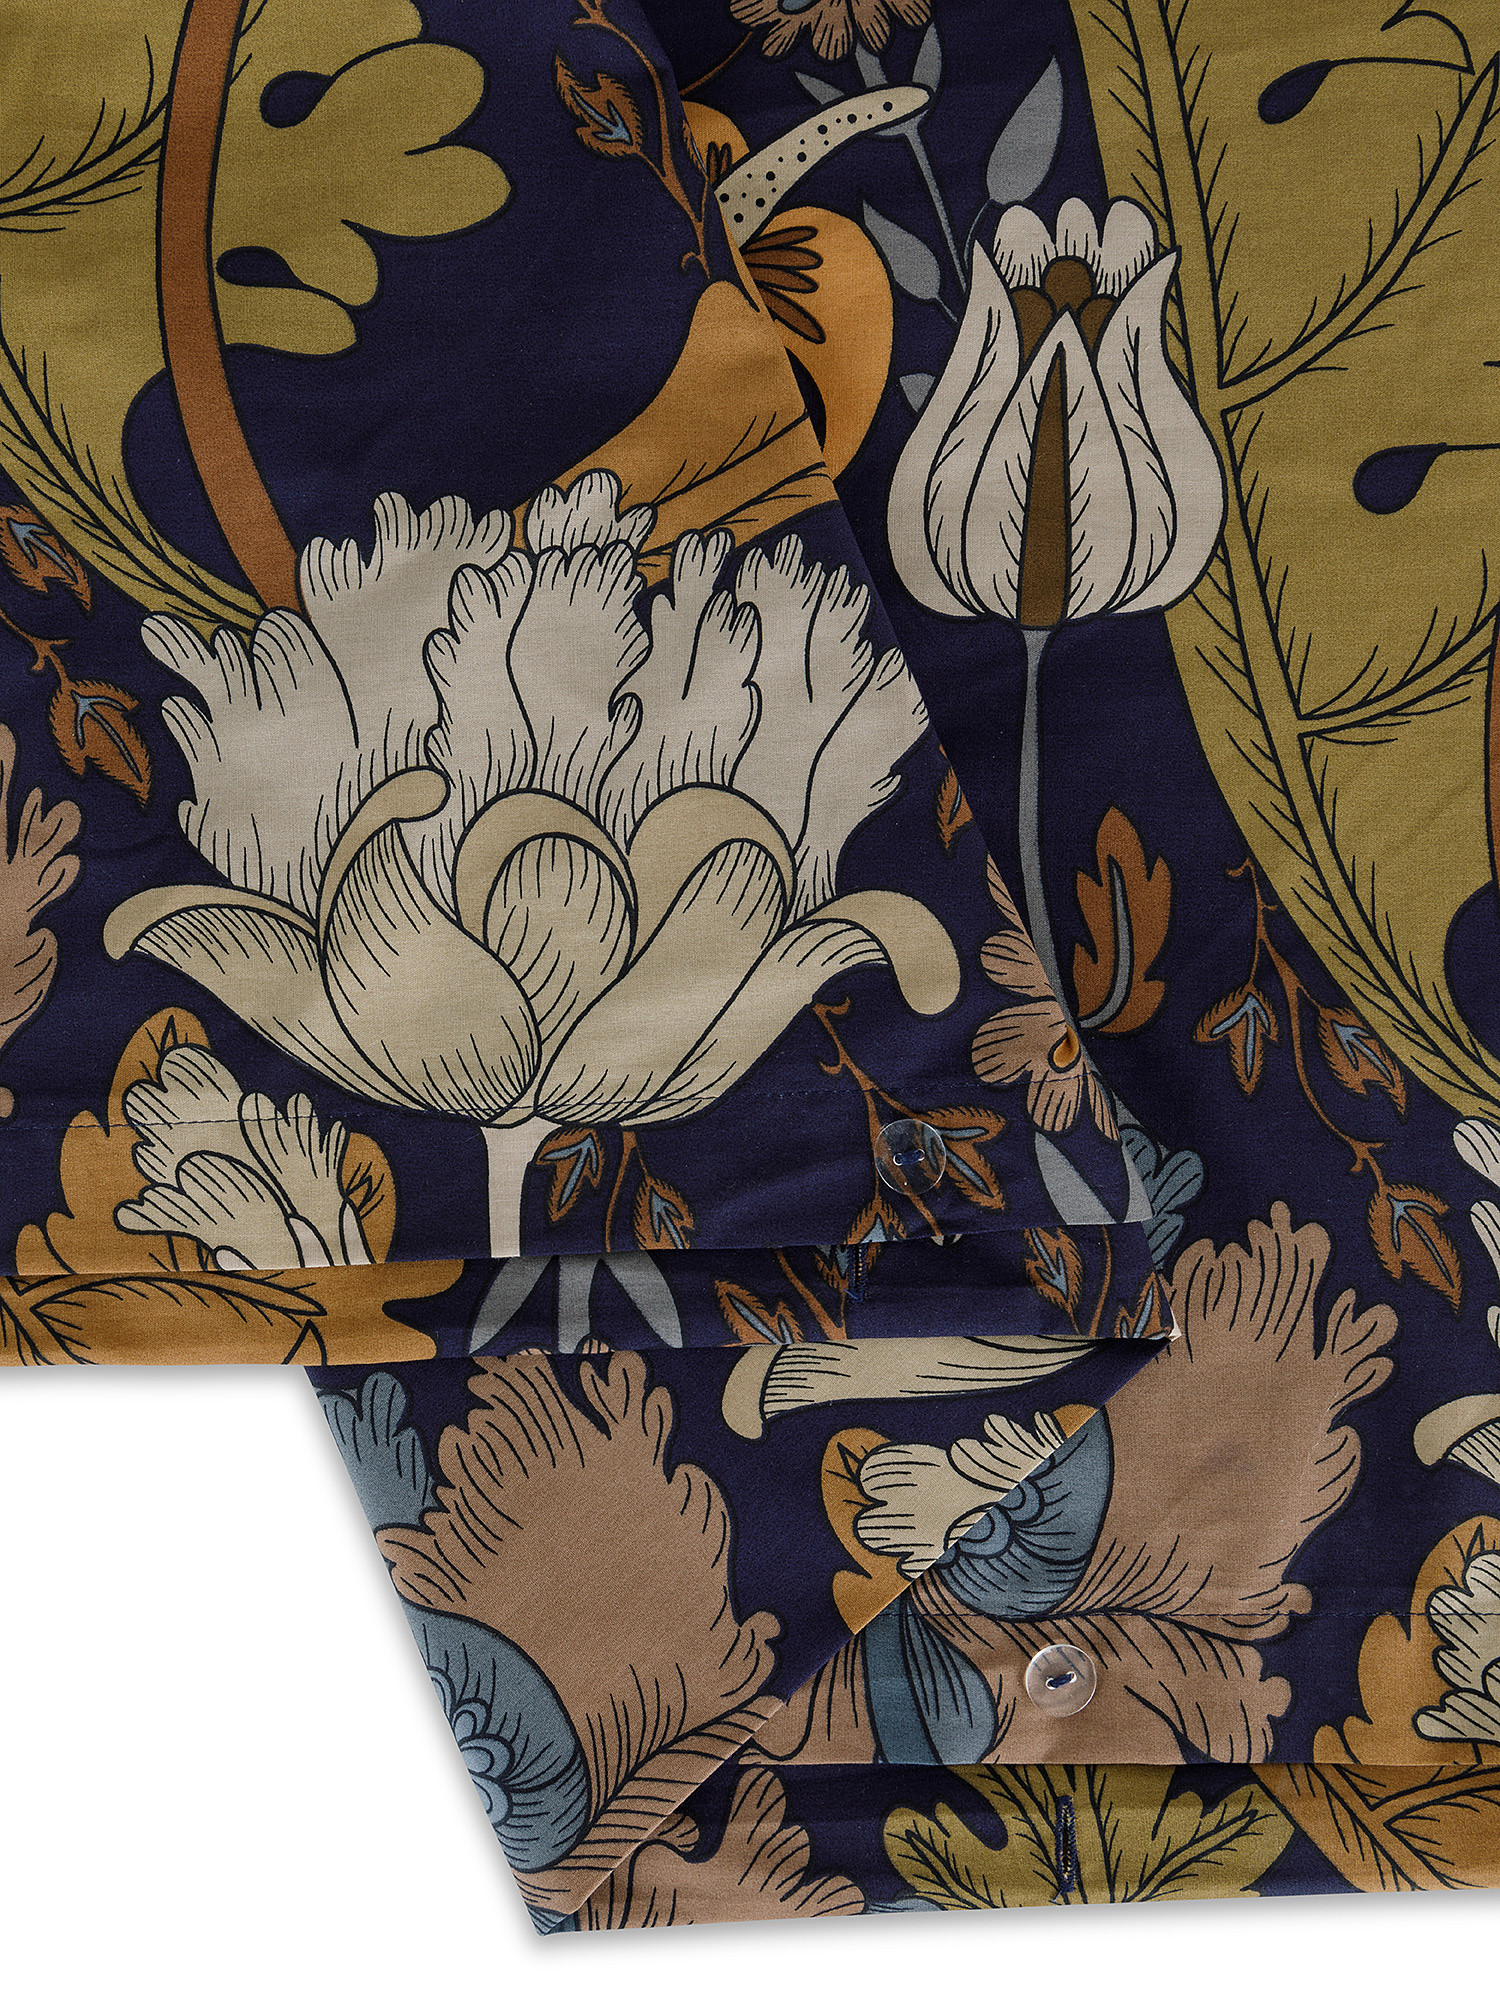 Floral patterned cotton percale duvet cover set, Multicolor, large image number 1